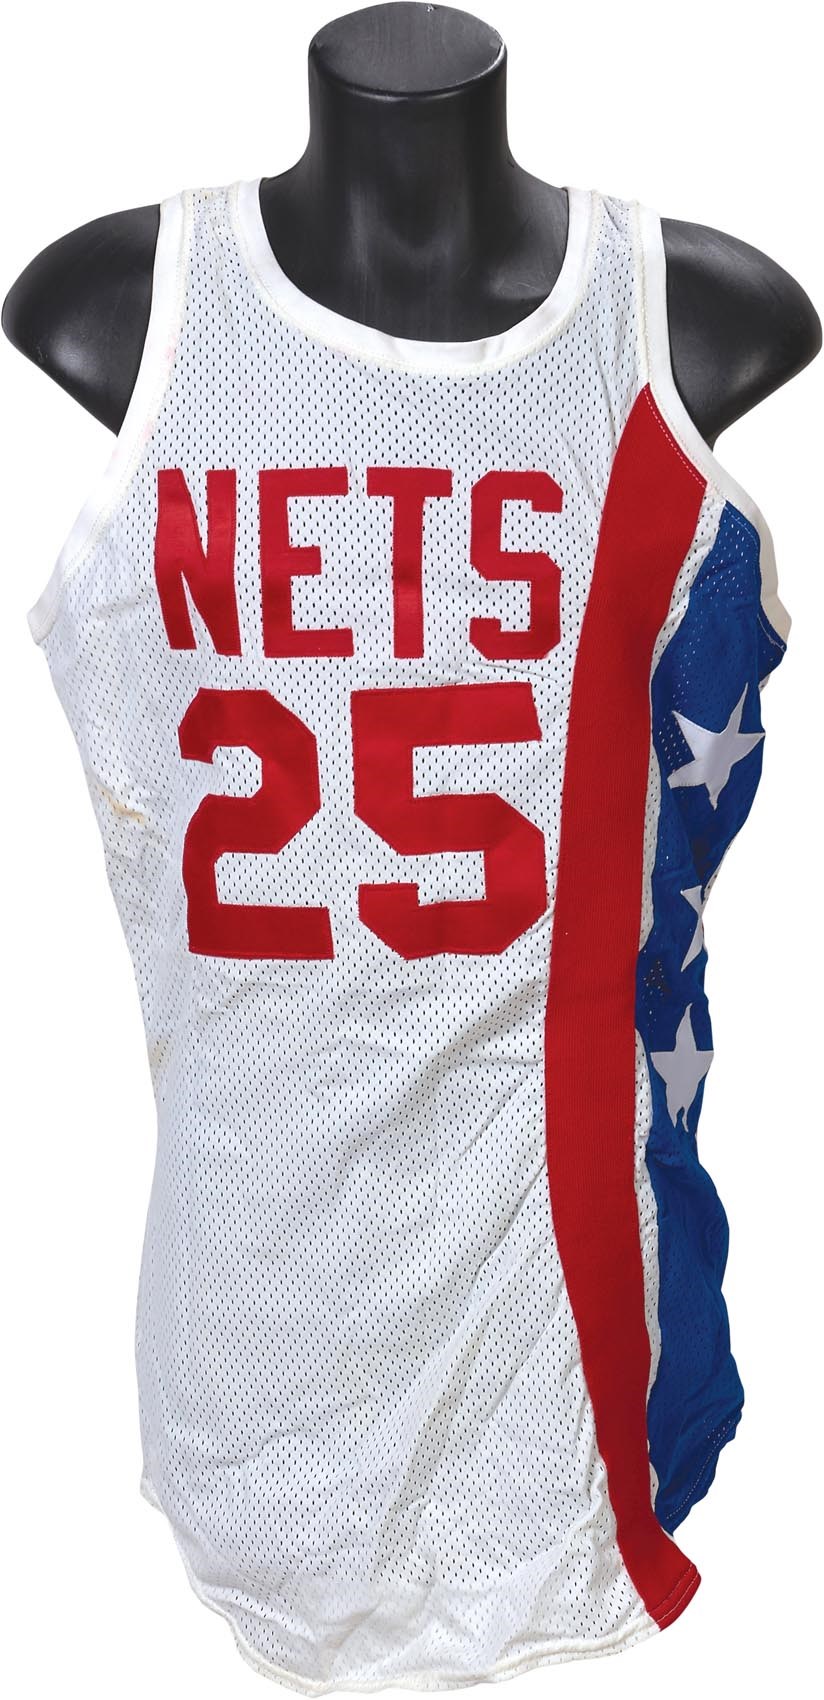 1983 Nets Uniform Custom Made for Joe Taub's Son (ex-Joe Taub Collection)